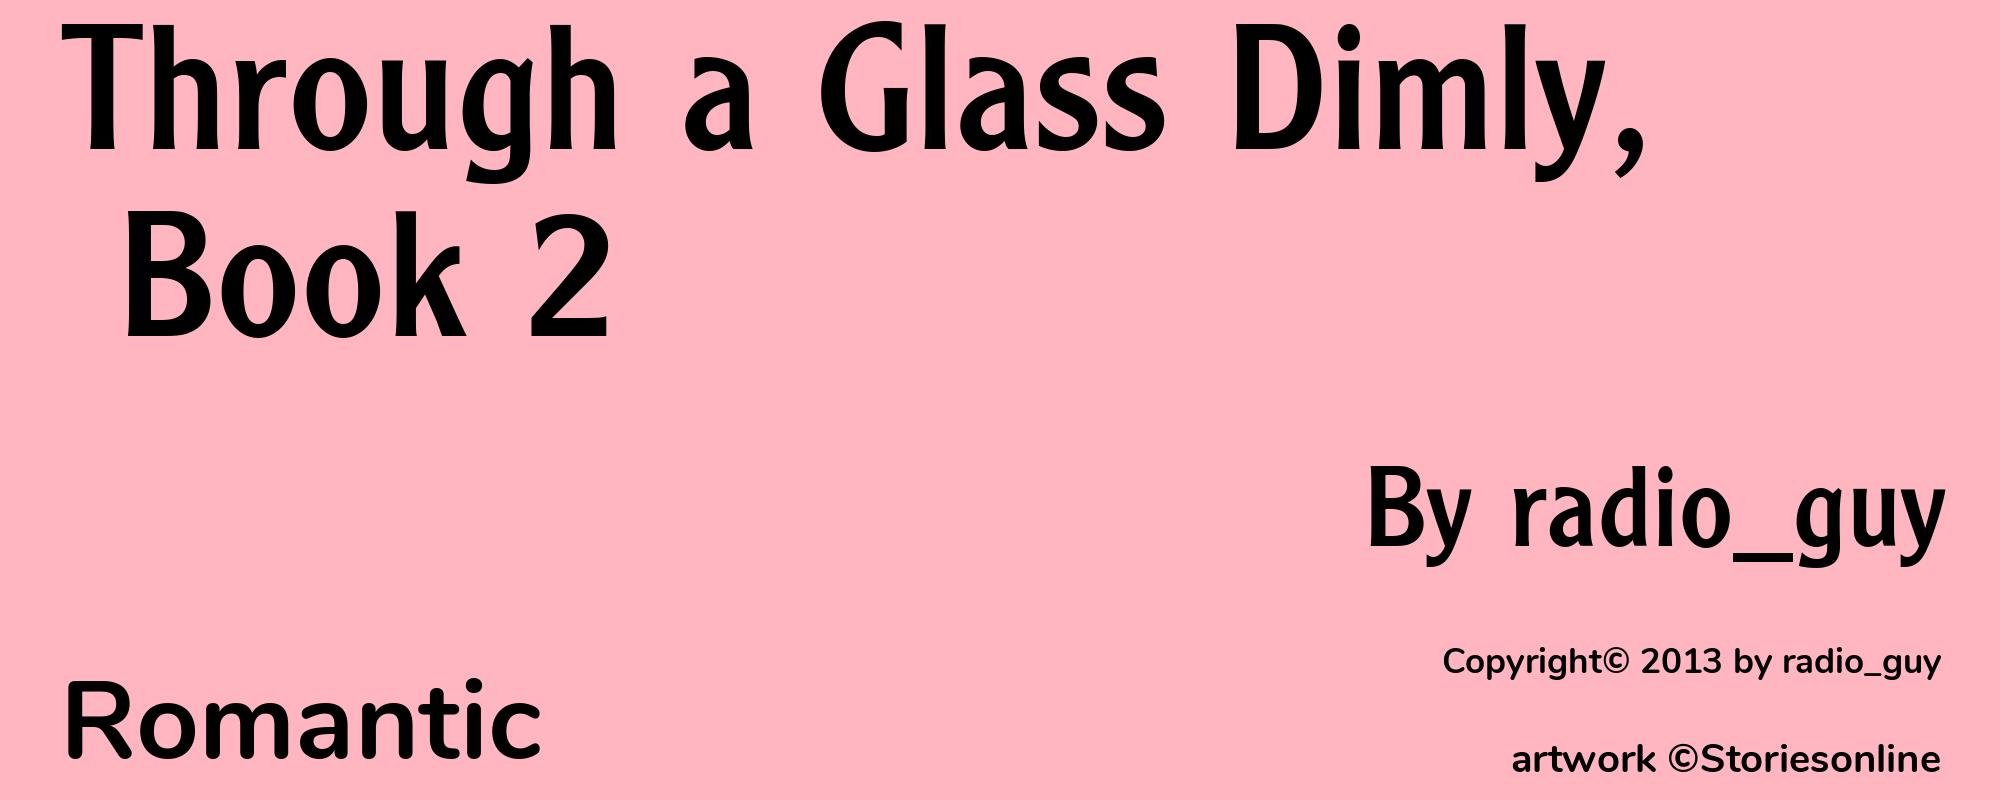 Through a Glass Dimly, Book 2 - Cover